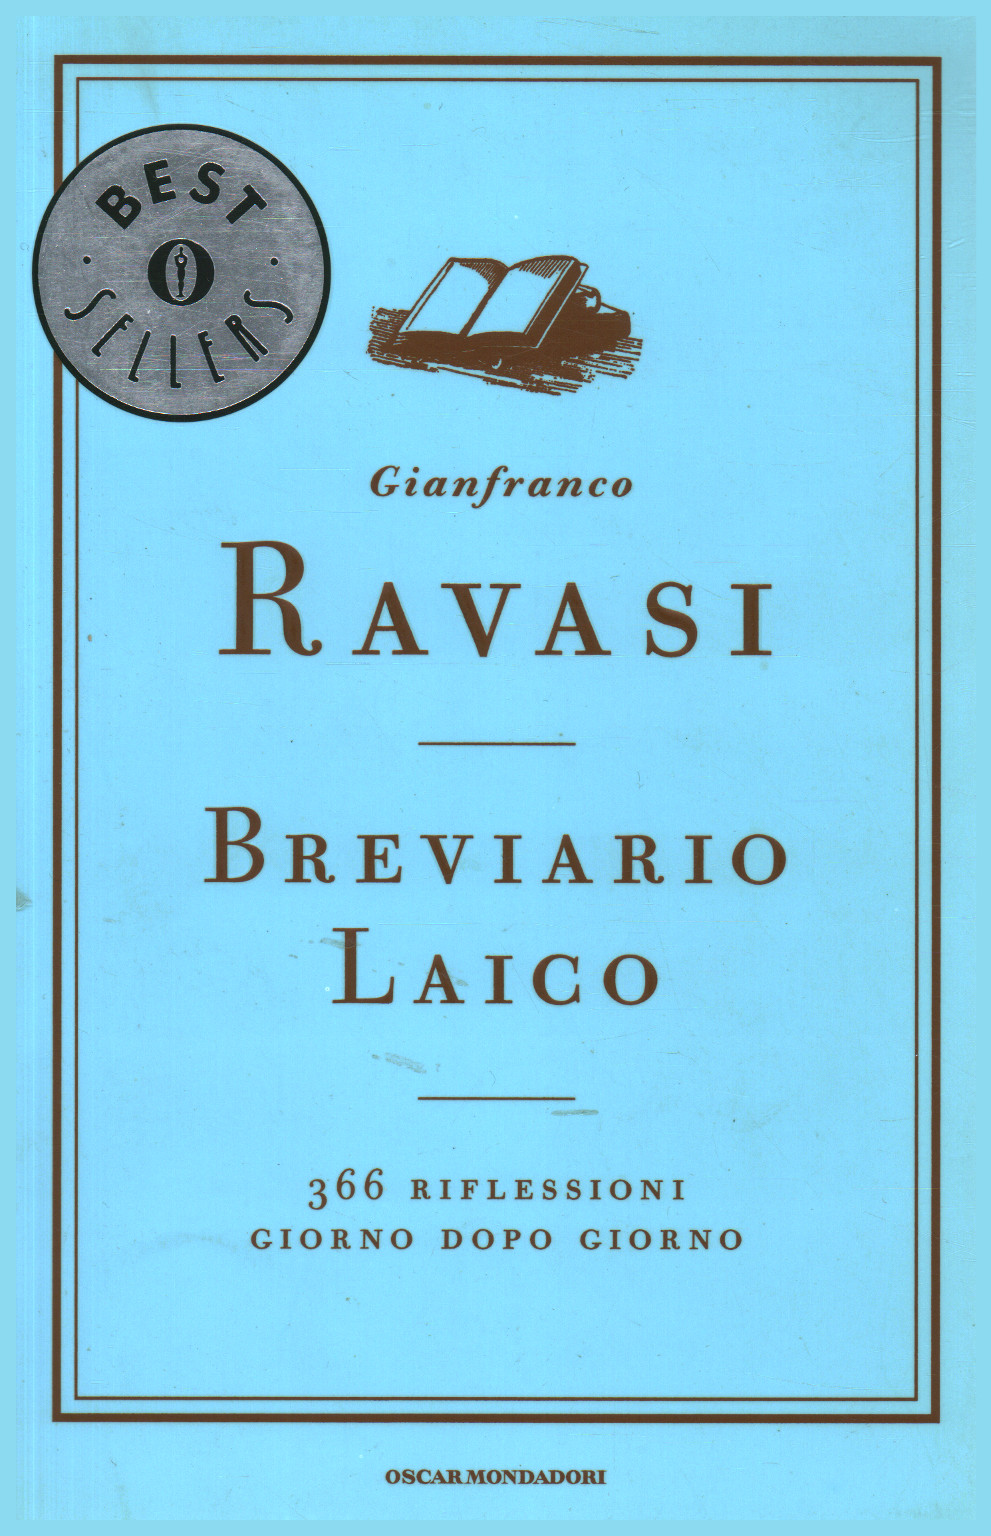 Breviario laico, Gianfranco Ravasi